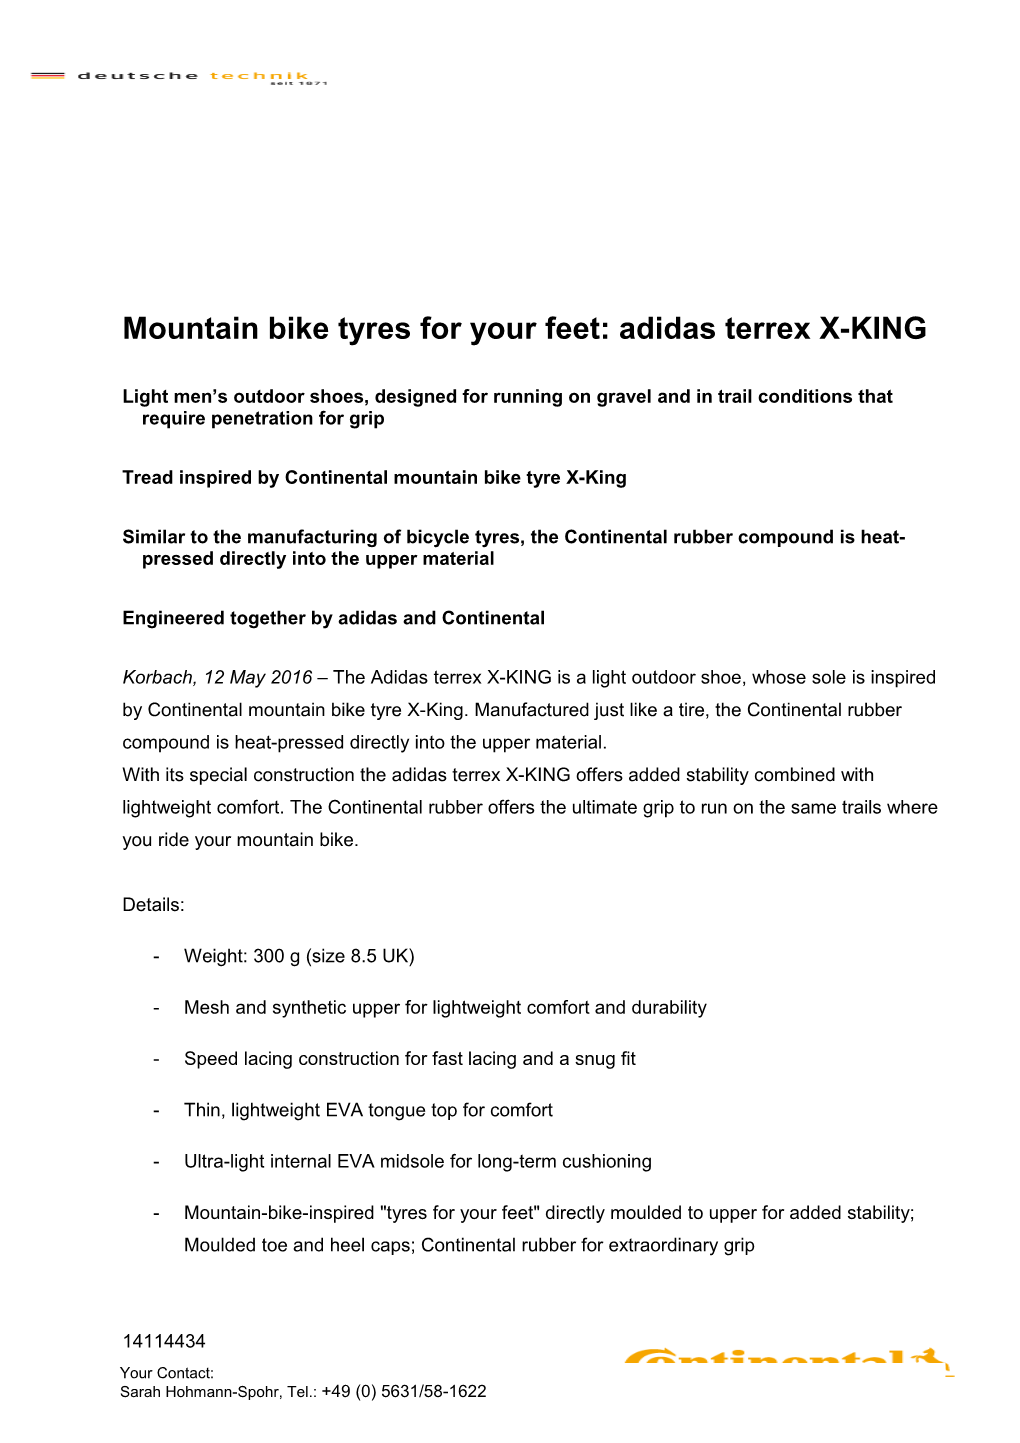 Mountain Bike Tyres for Your Feet: Adidasterrex X-KING